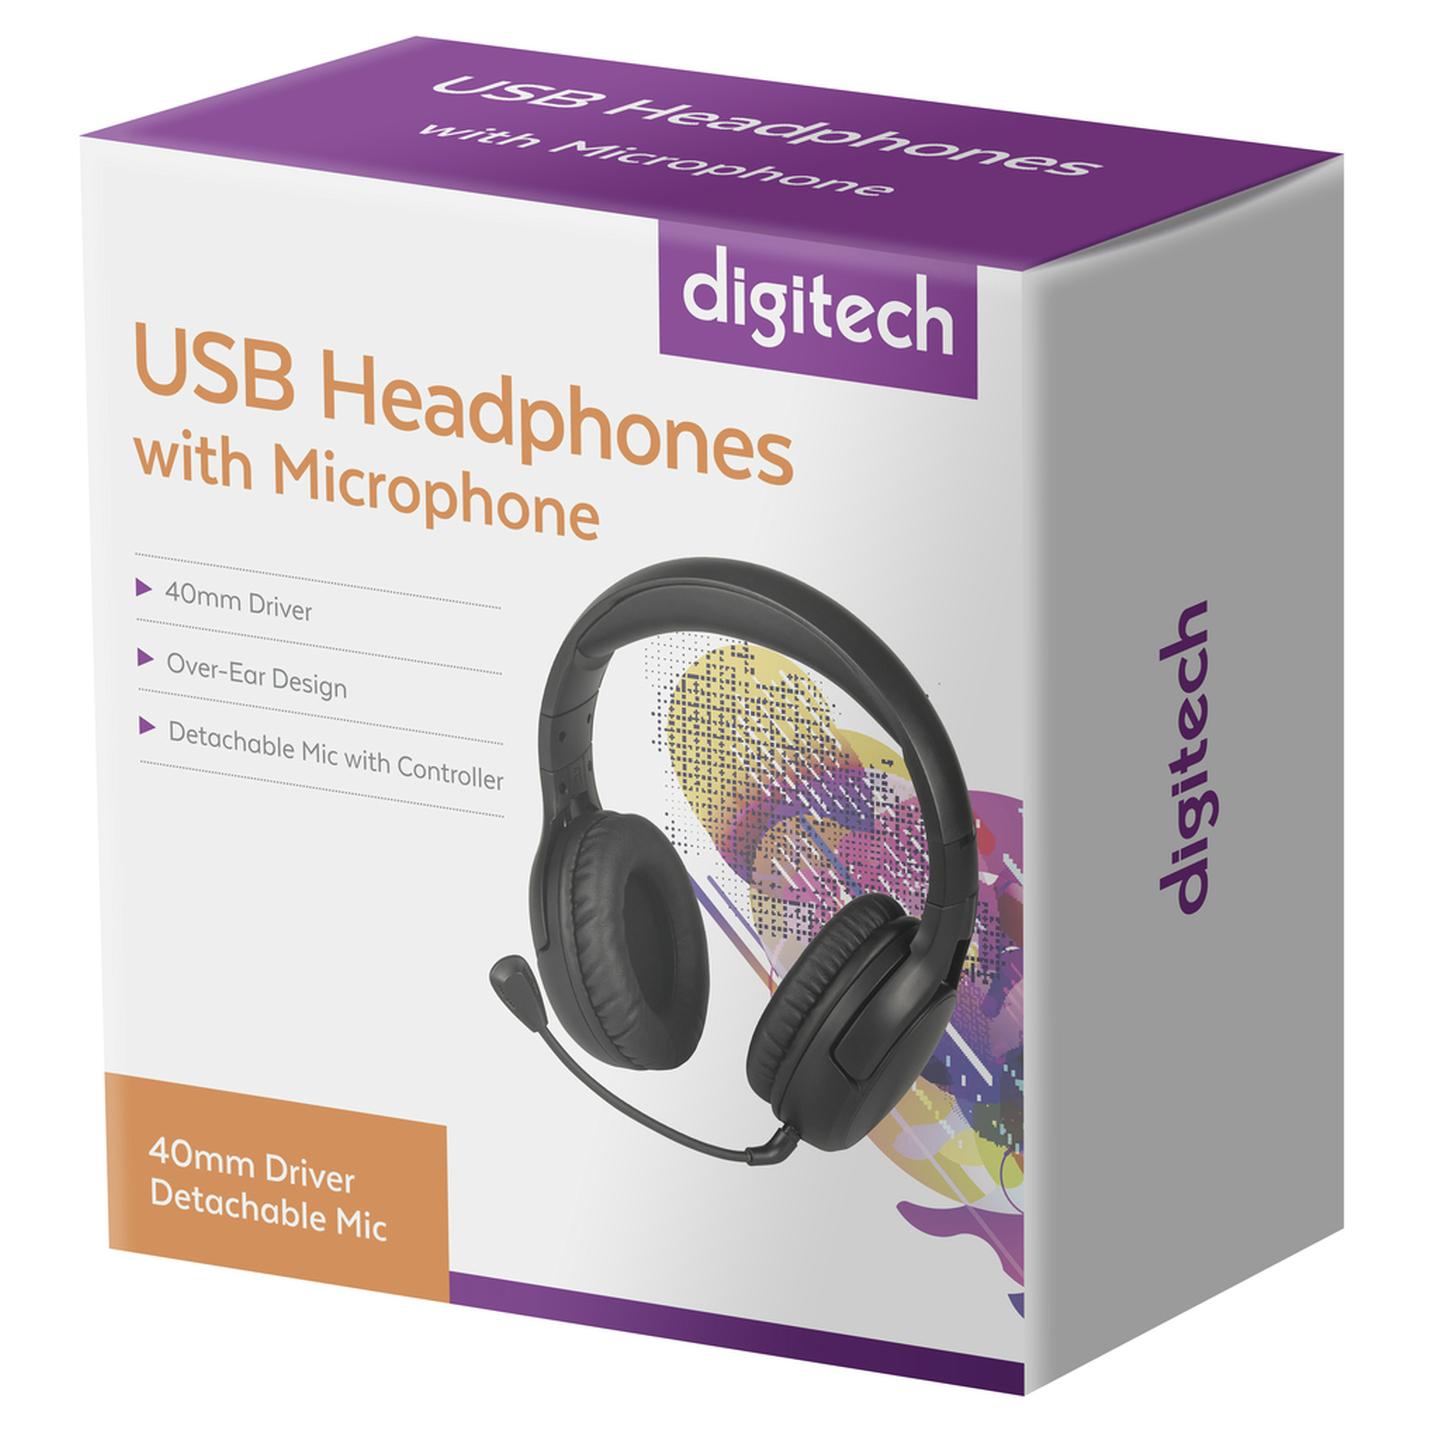 Digitech USB Headphones with Microphone